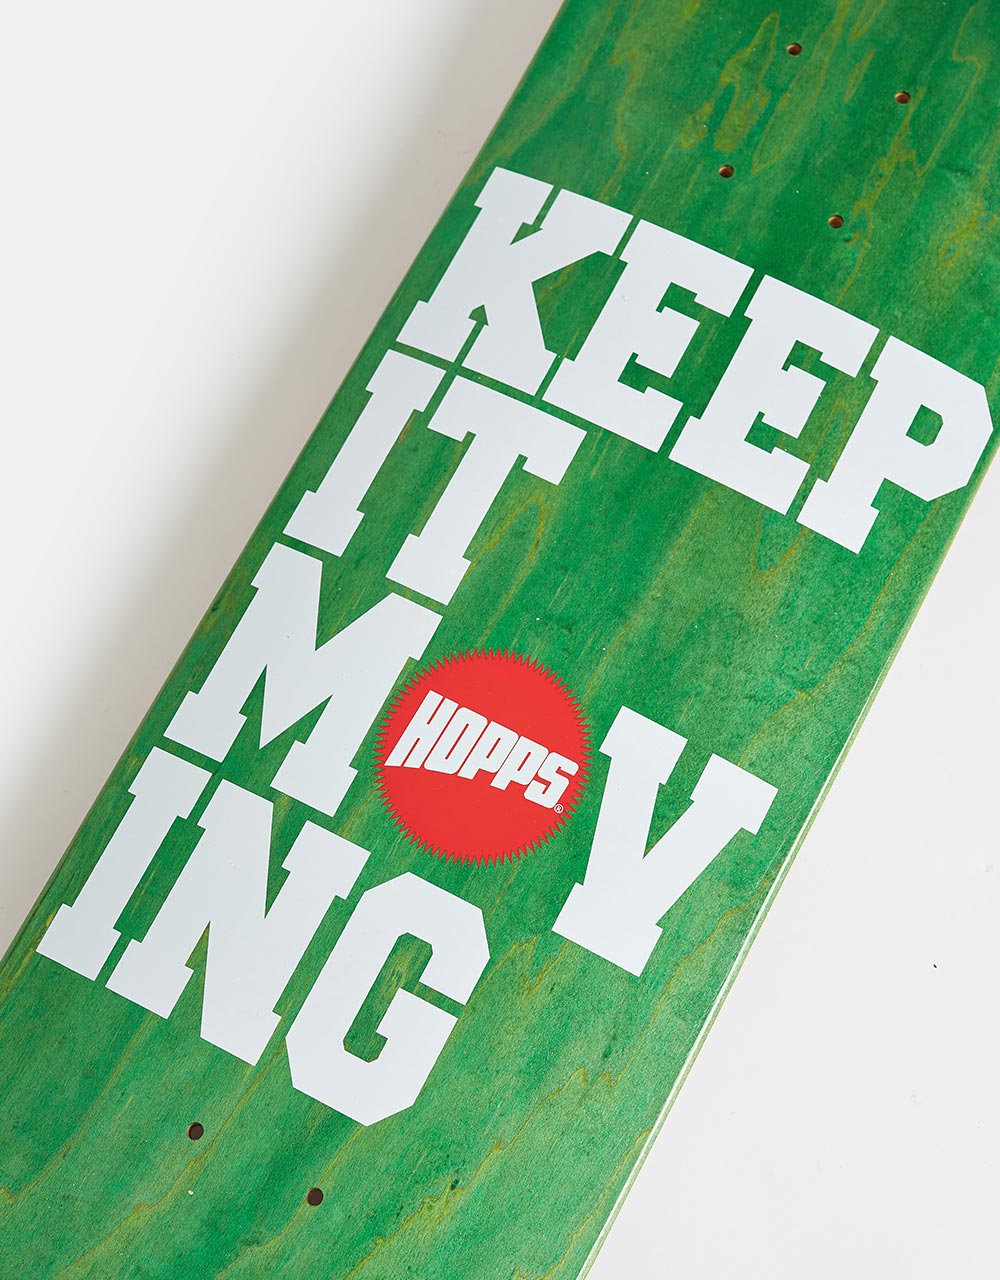 Hopps Keep it Moving WG Skateboard Deck - 8.125"